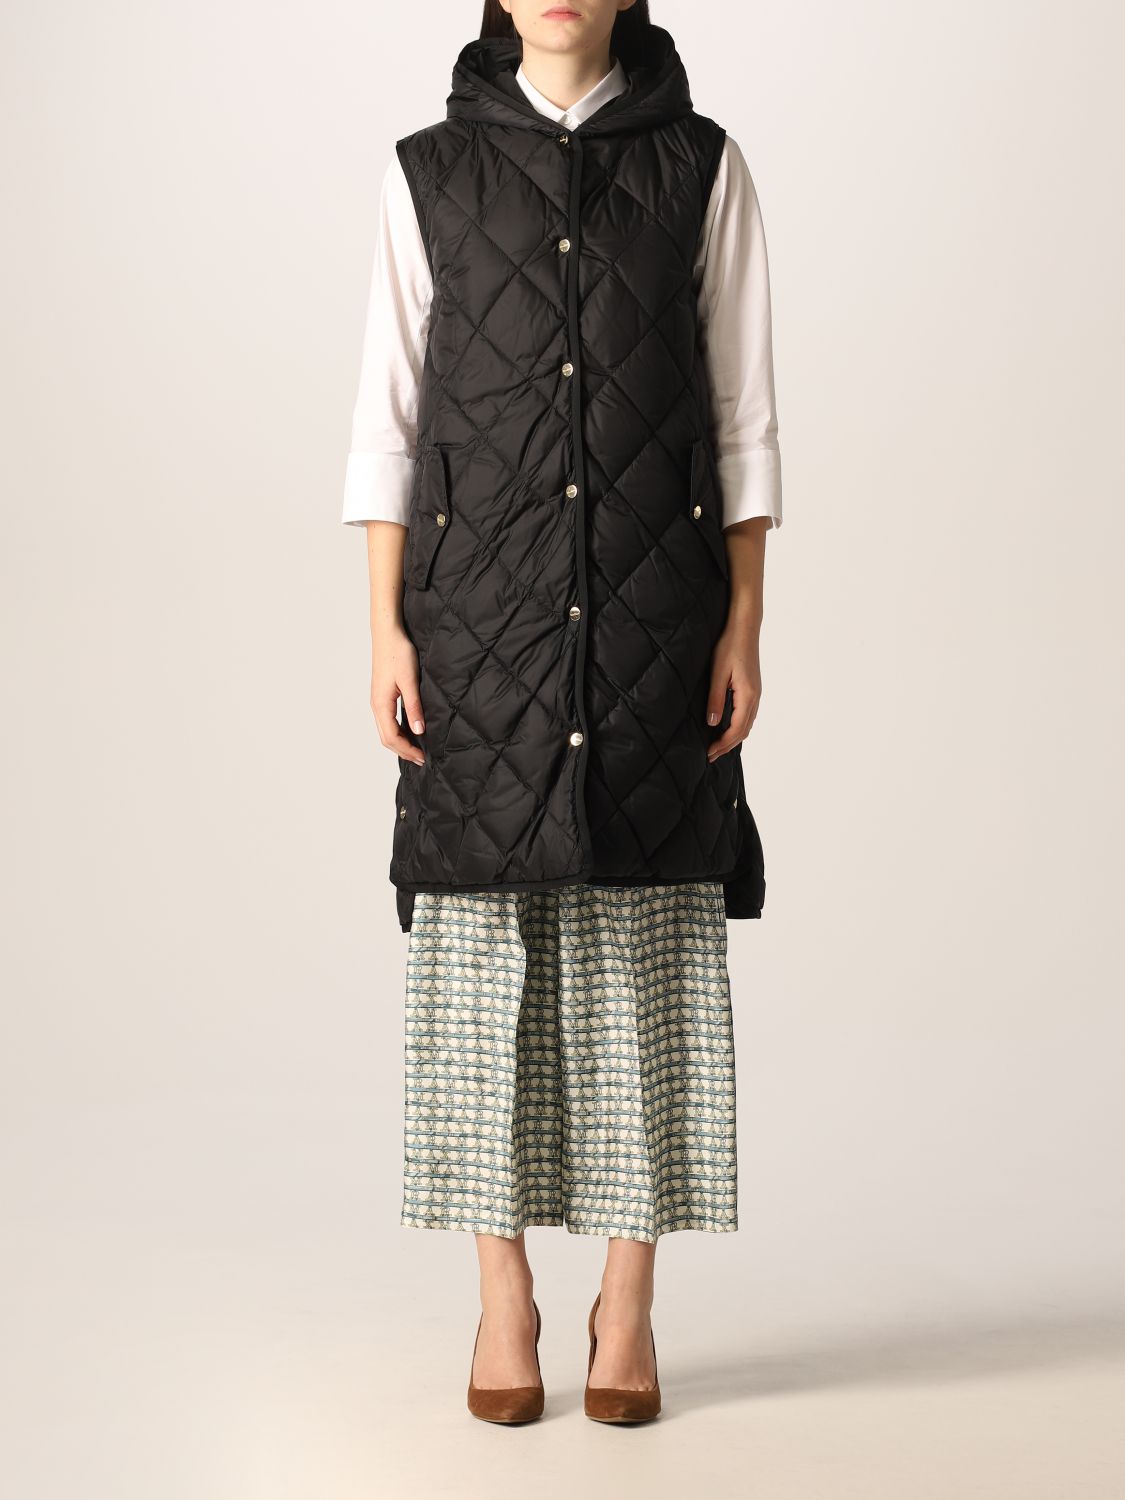 MAX MARA: quilted nylon long vest - Black | Max Mara waistcoat ...